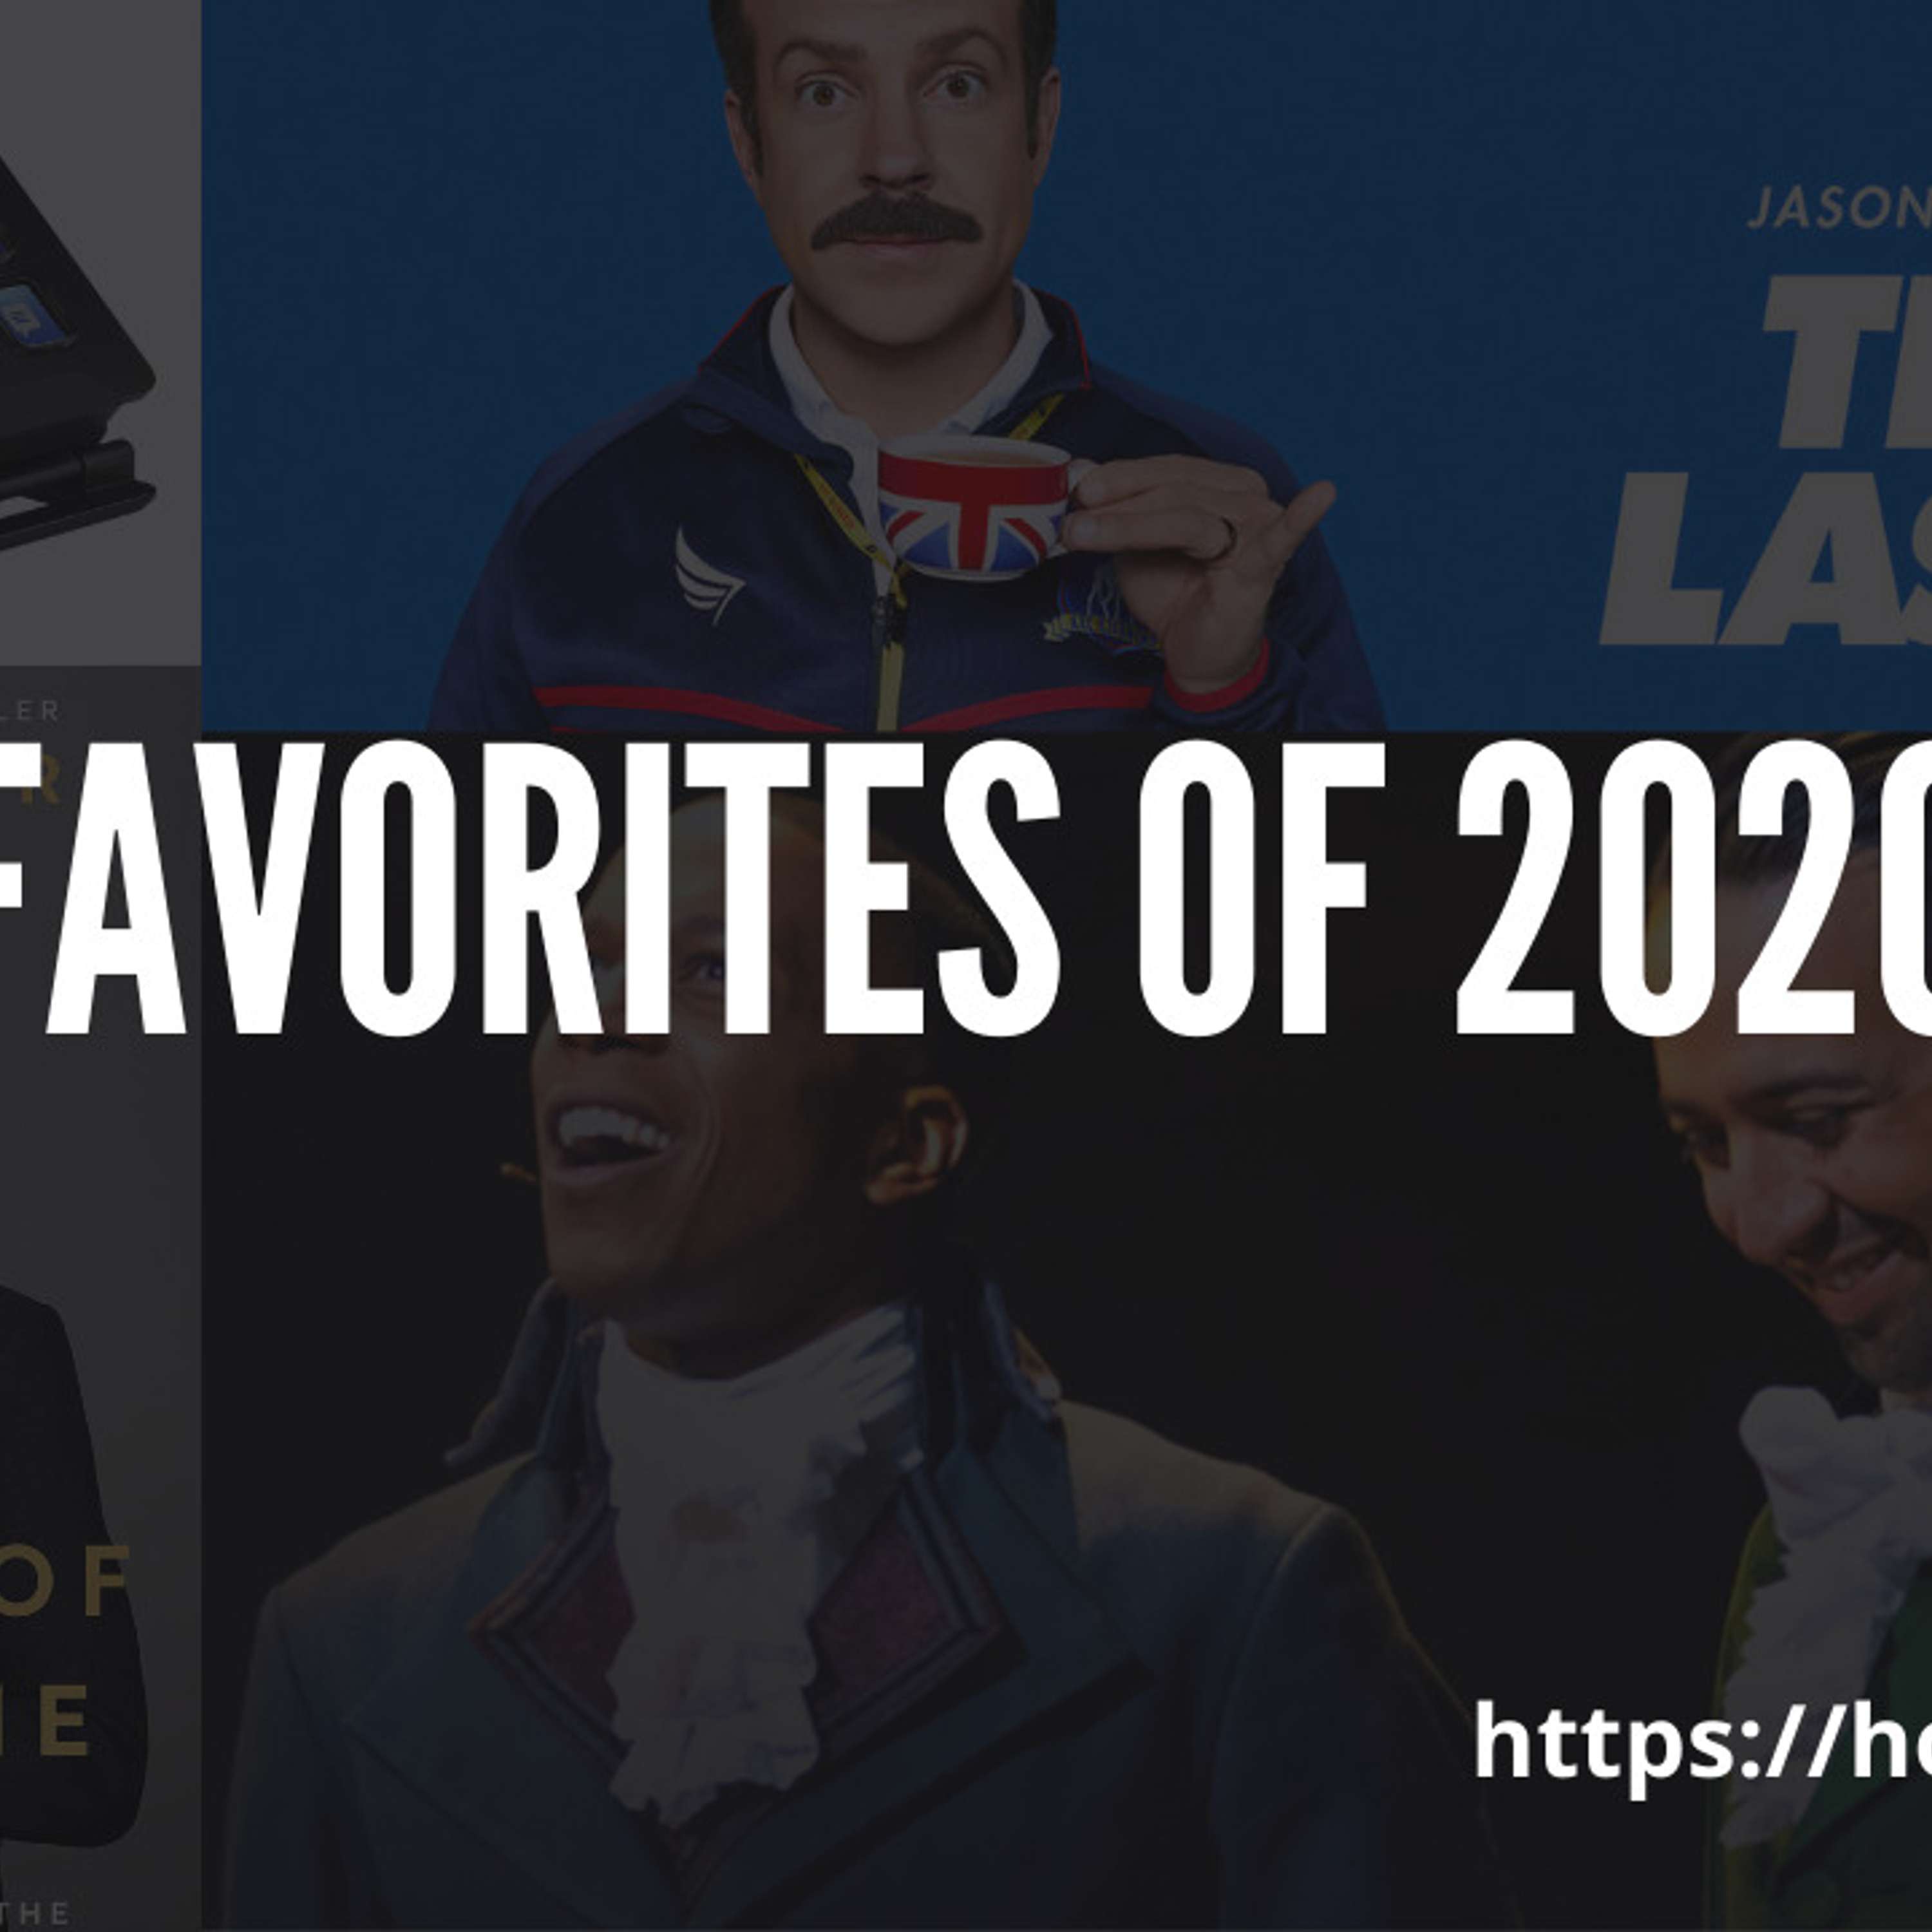 Favorites of 2020